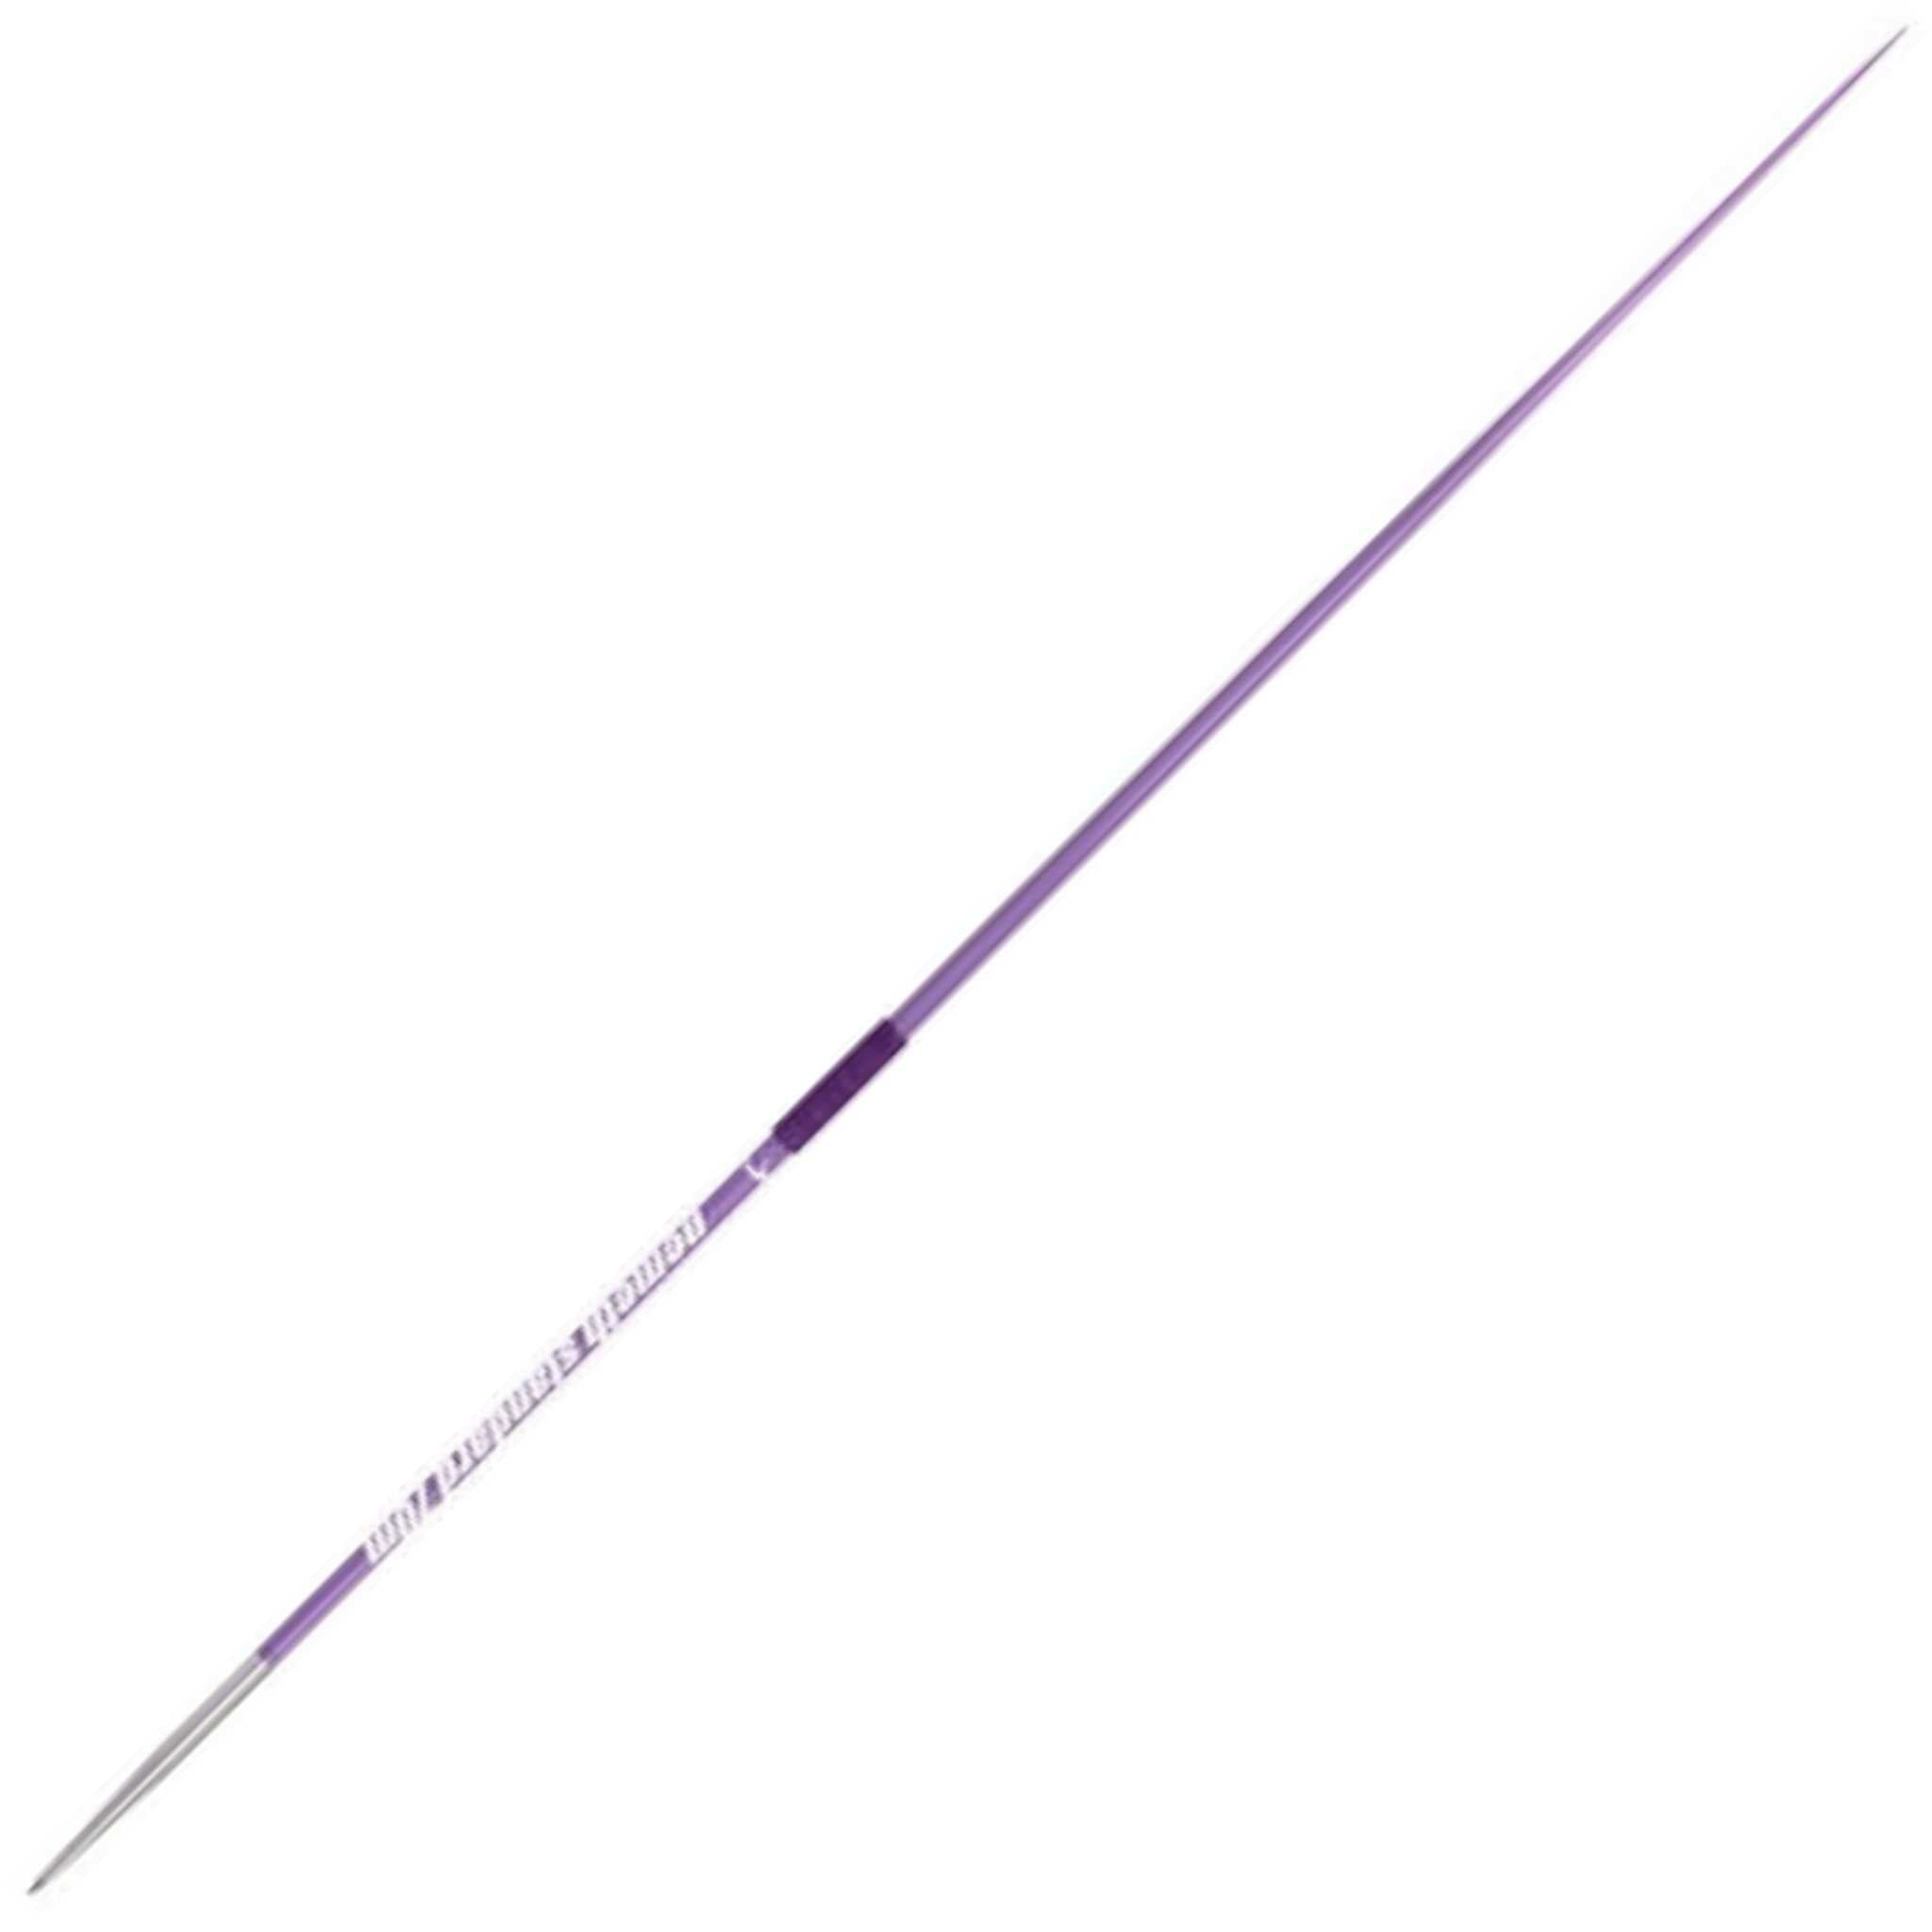 Nemeth Standard Javelin | 800g, 600g | Purple body with purple grip cord and white writing